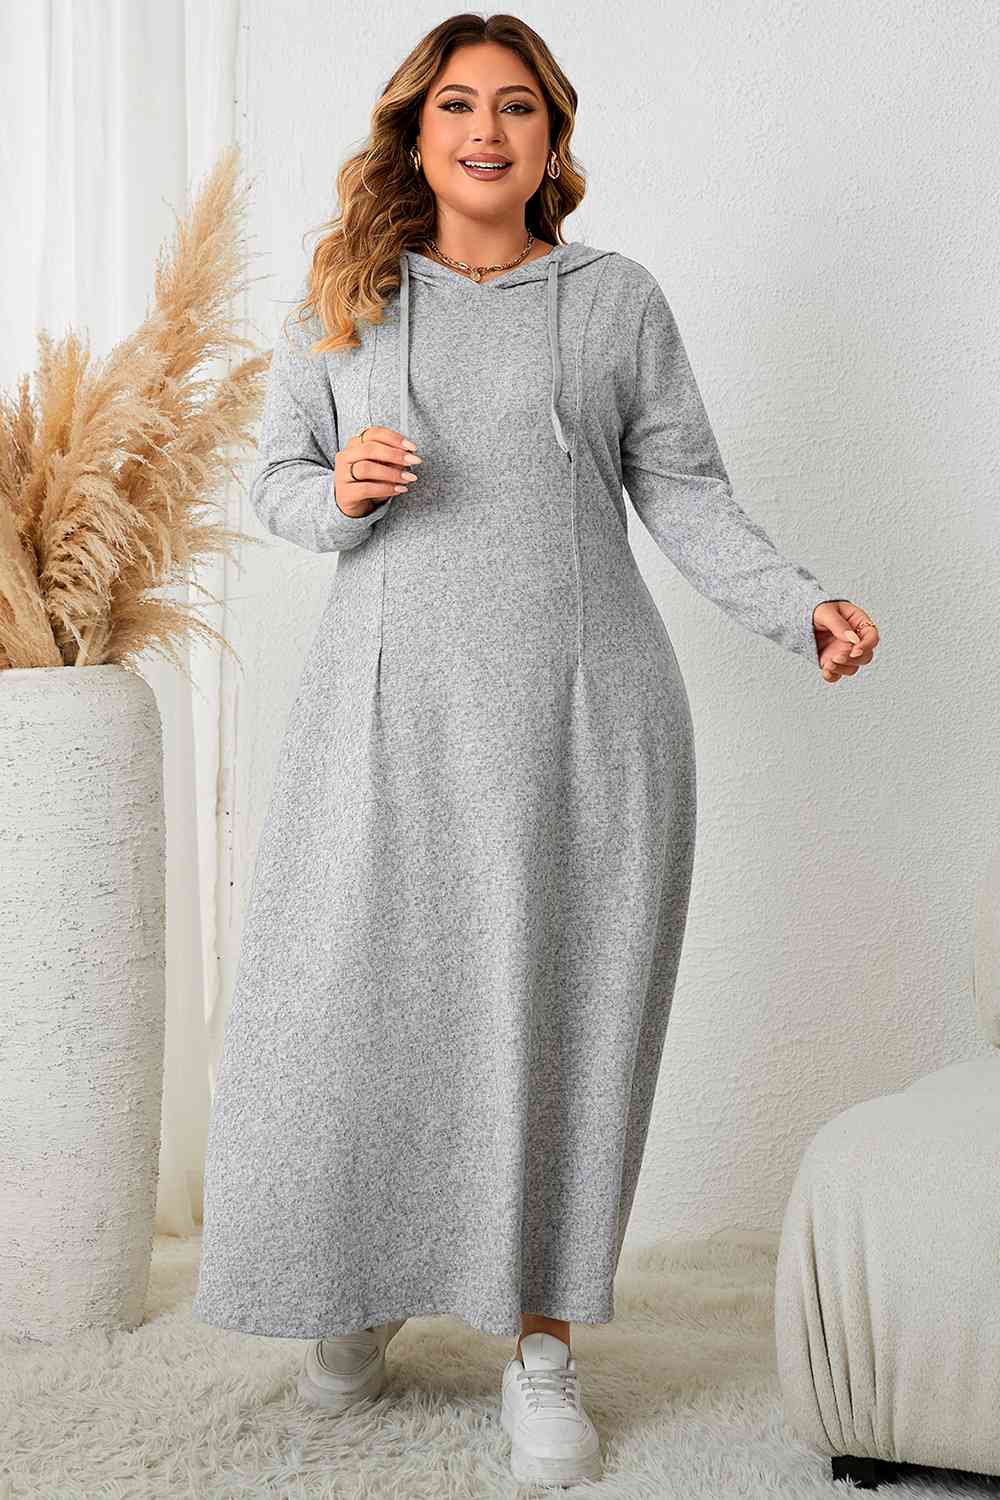 TEEK - Heather Grey Plus Size Long Sleeve Hooded Dress DRESS TEEK Trend   